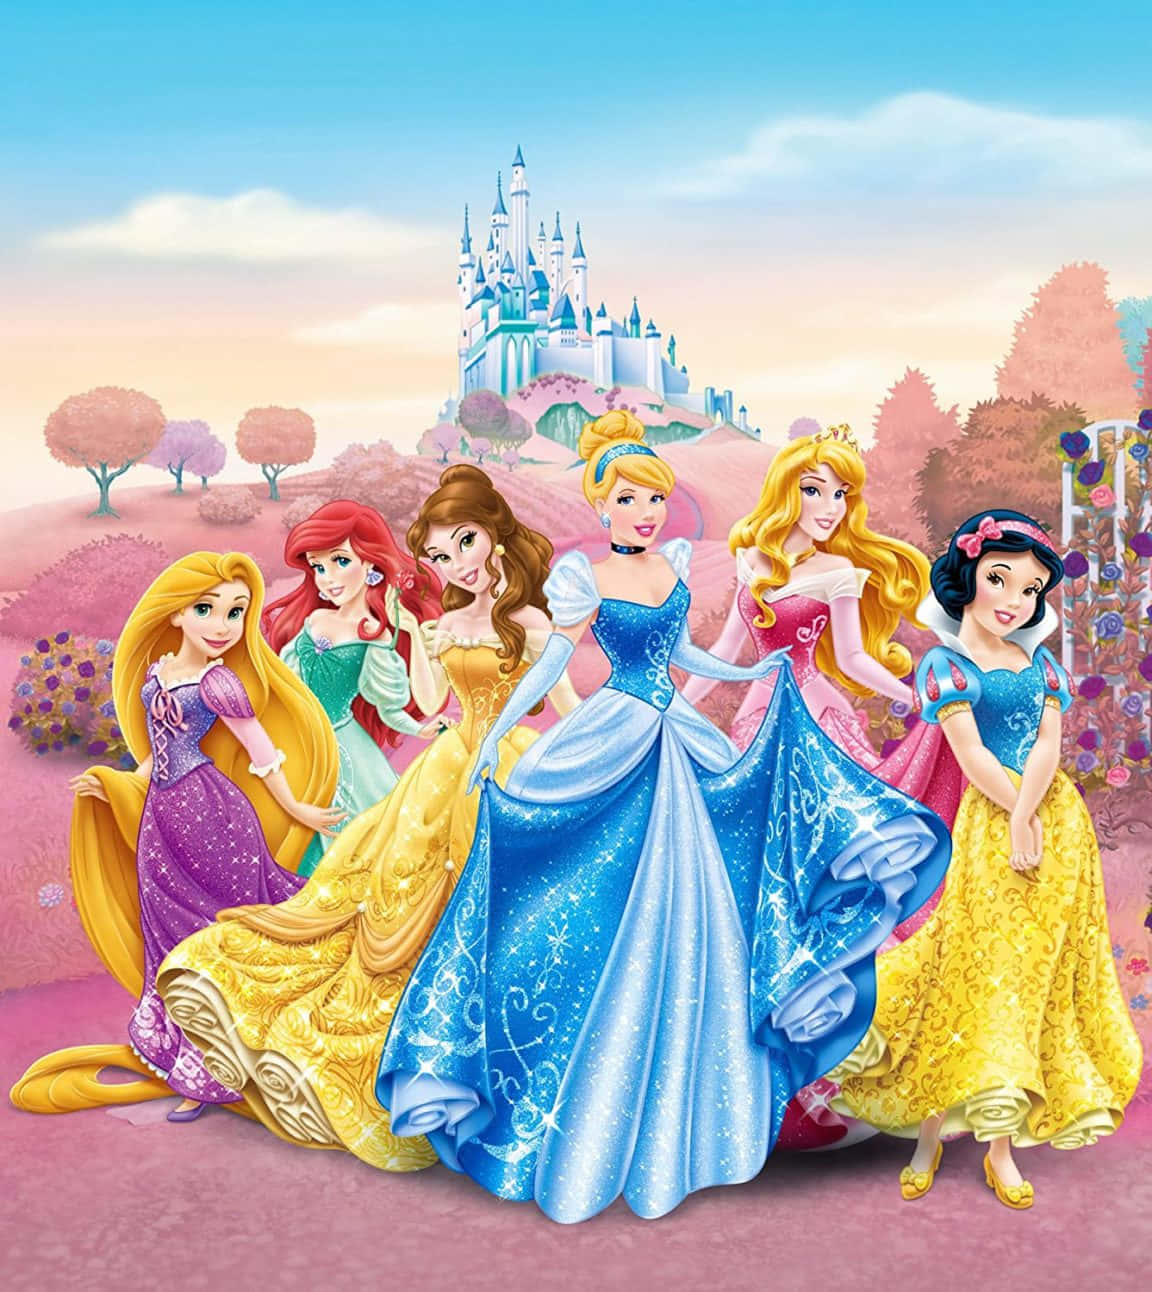 Hyllaarvet Efter Disney-prinsessorna